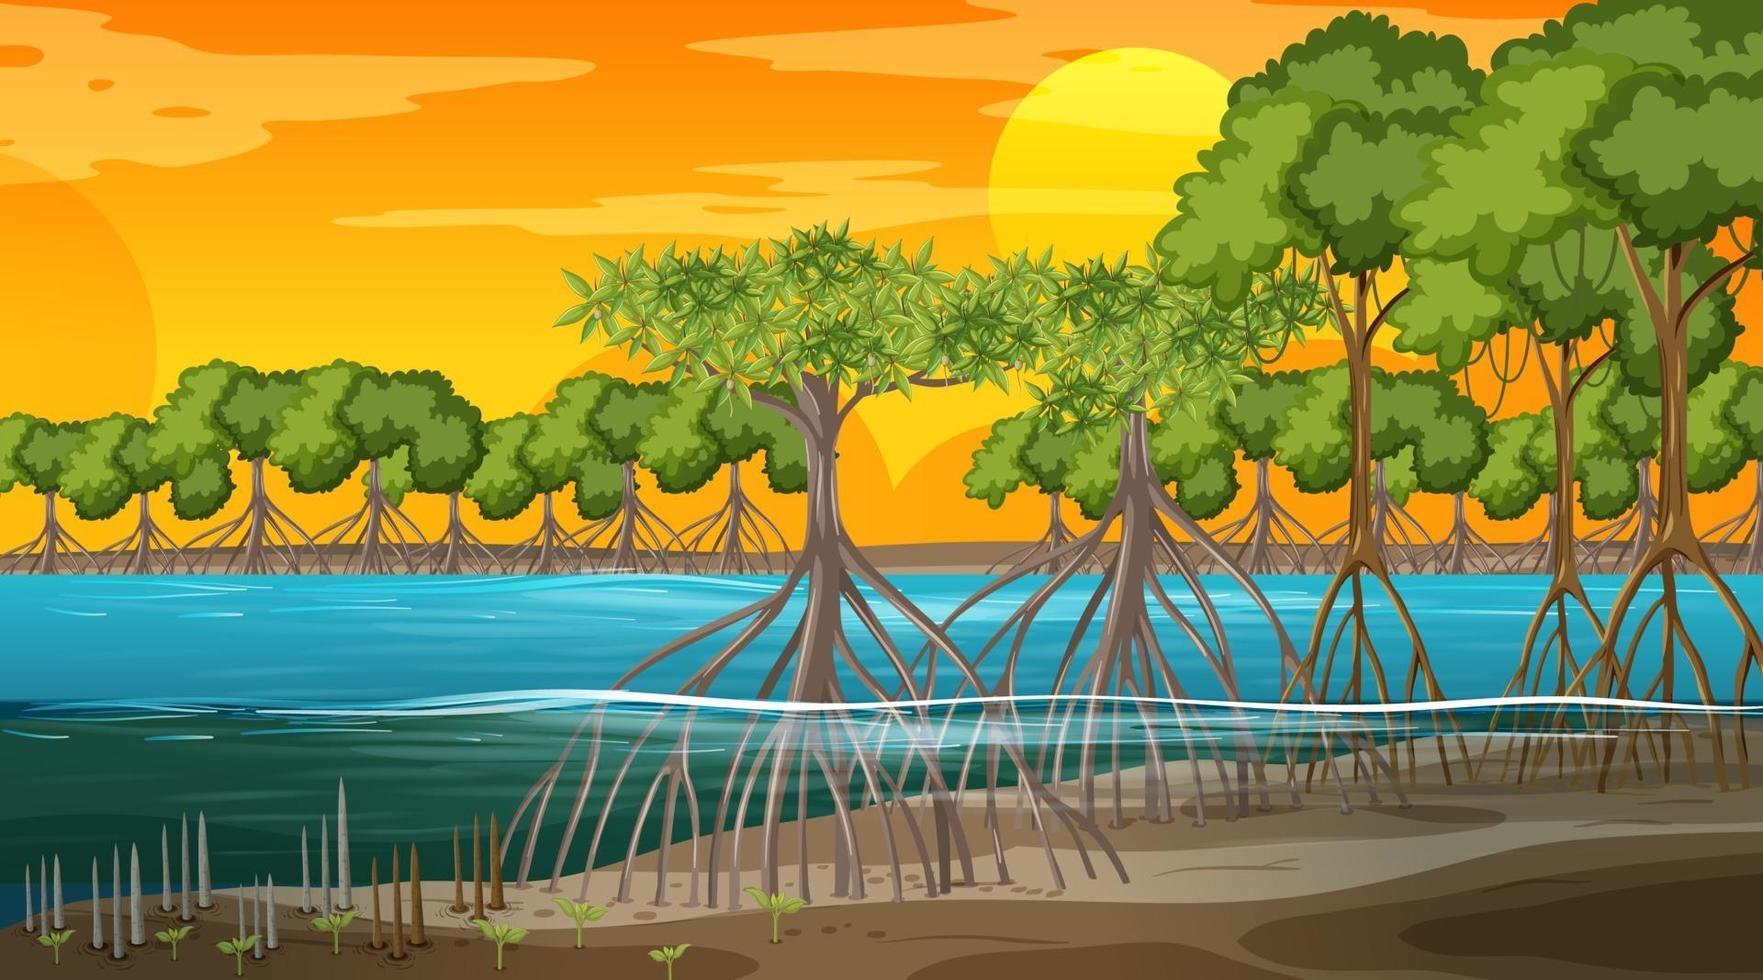 Mangrovenwald Landschaftsszene bei Sonnenuntergang vektor